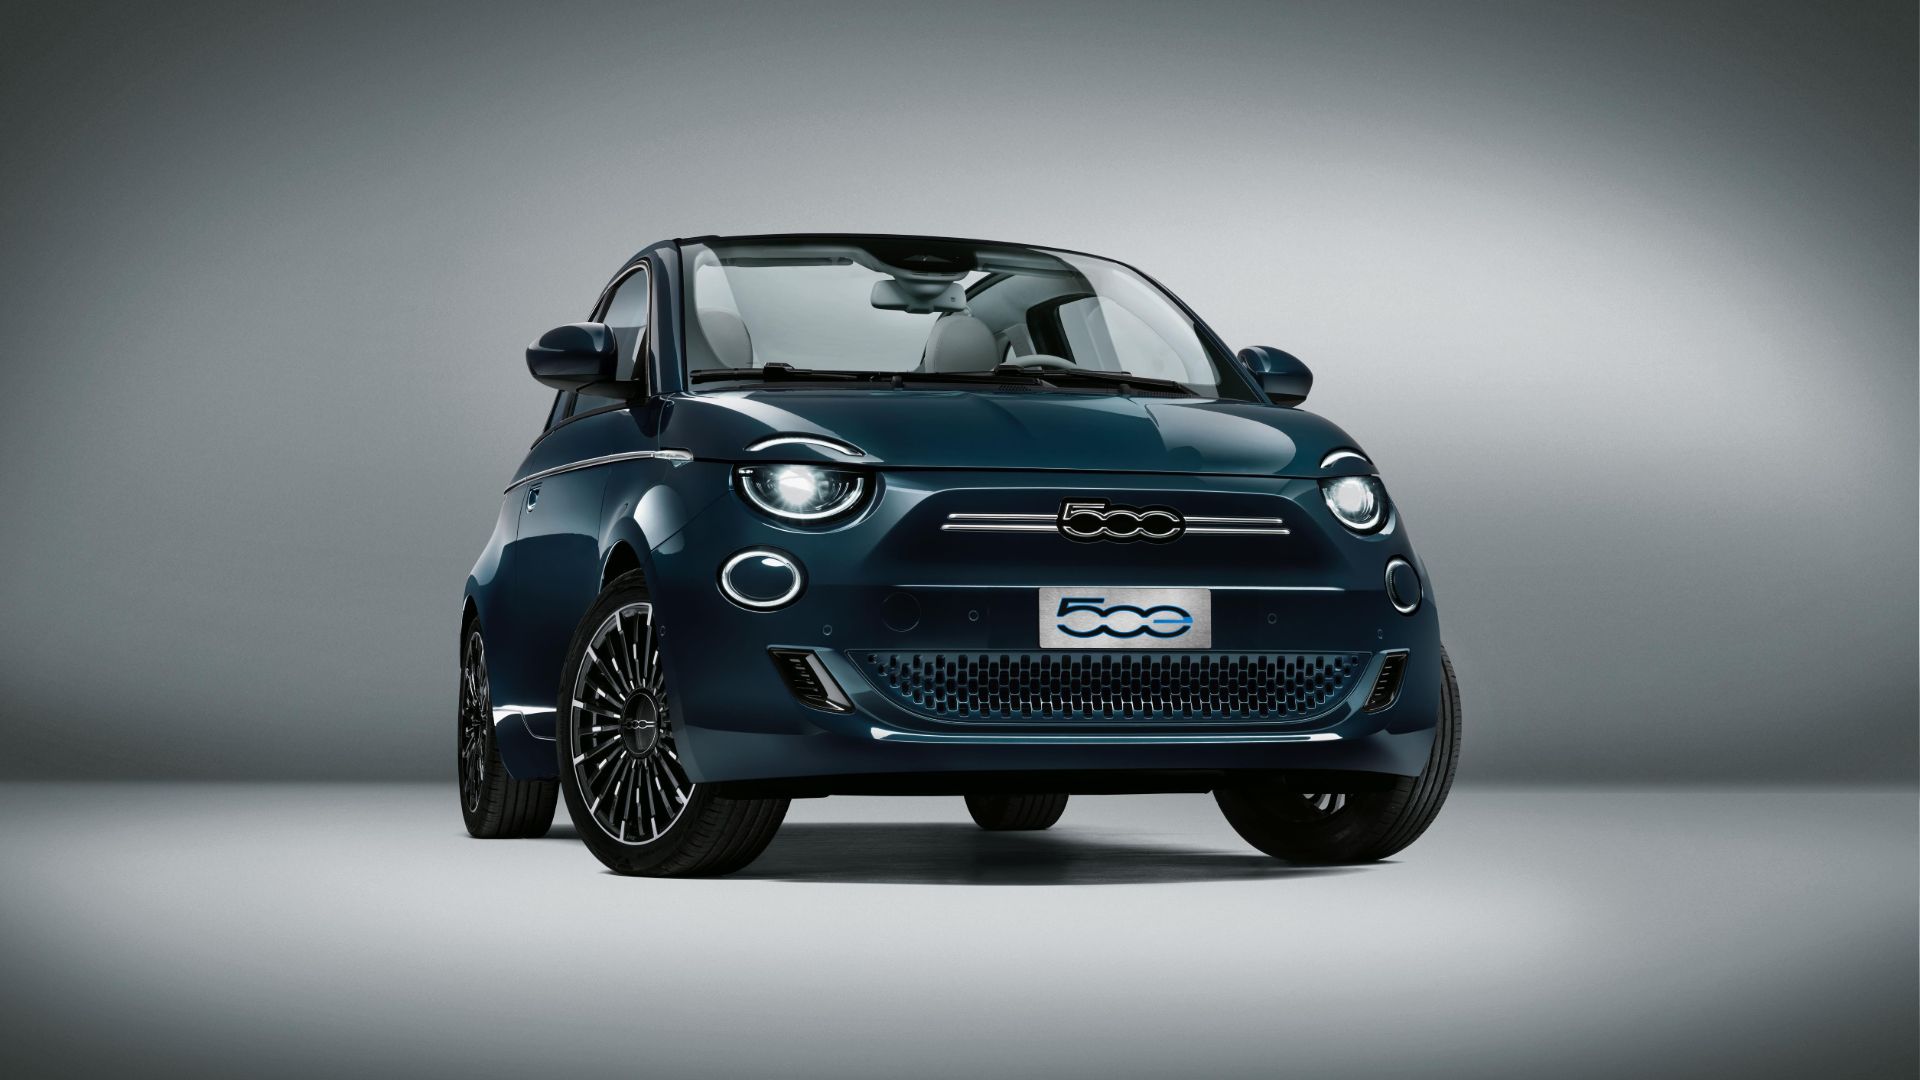 2020 Fiat 500 revealed